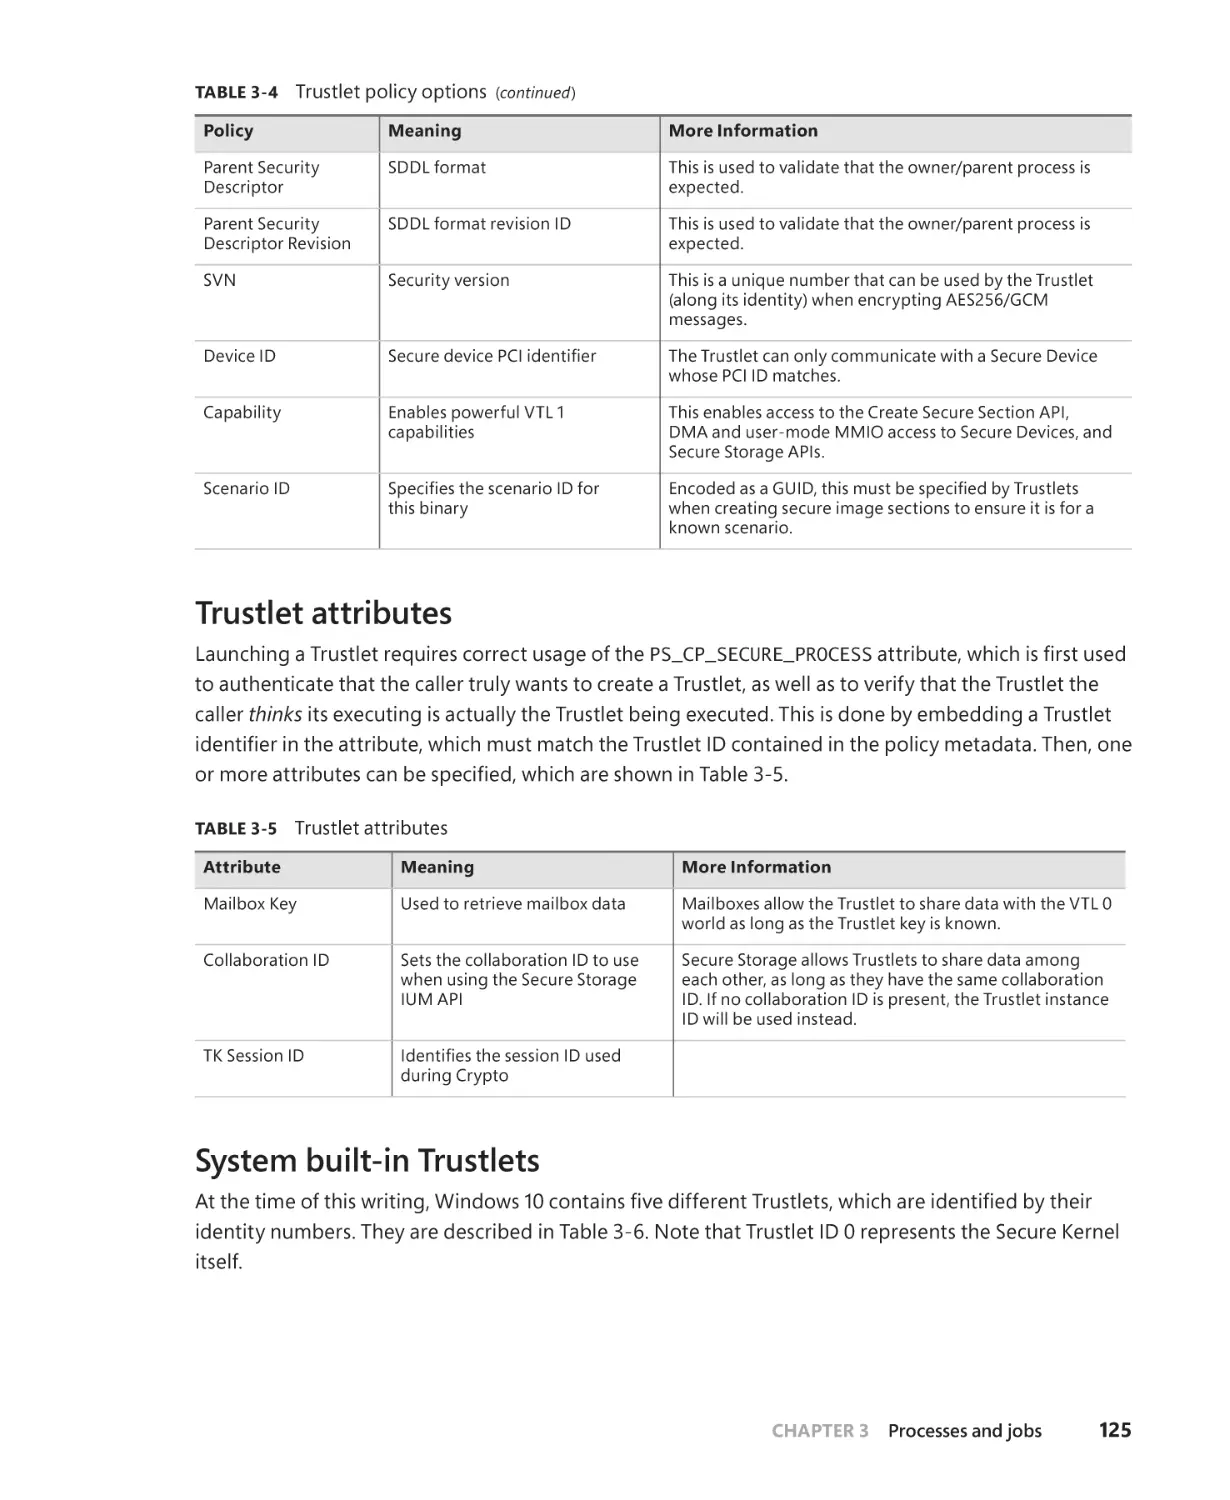 Trustlet attributes
System built-in Trustlets